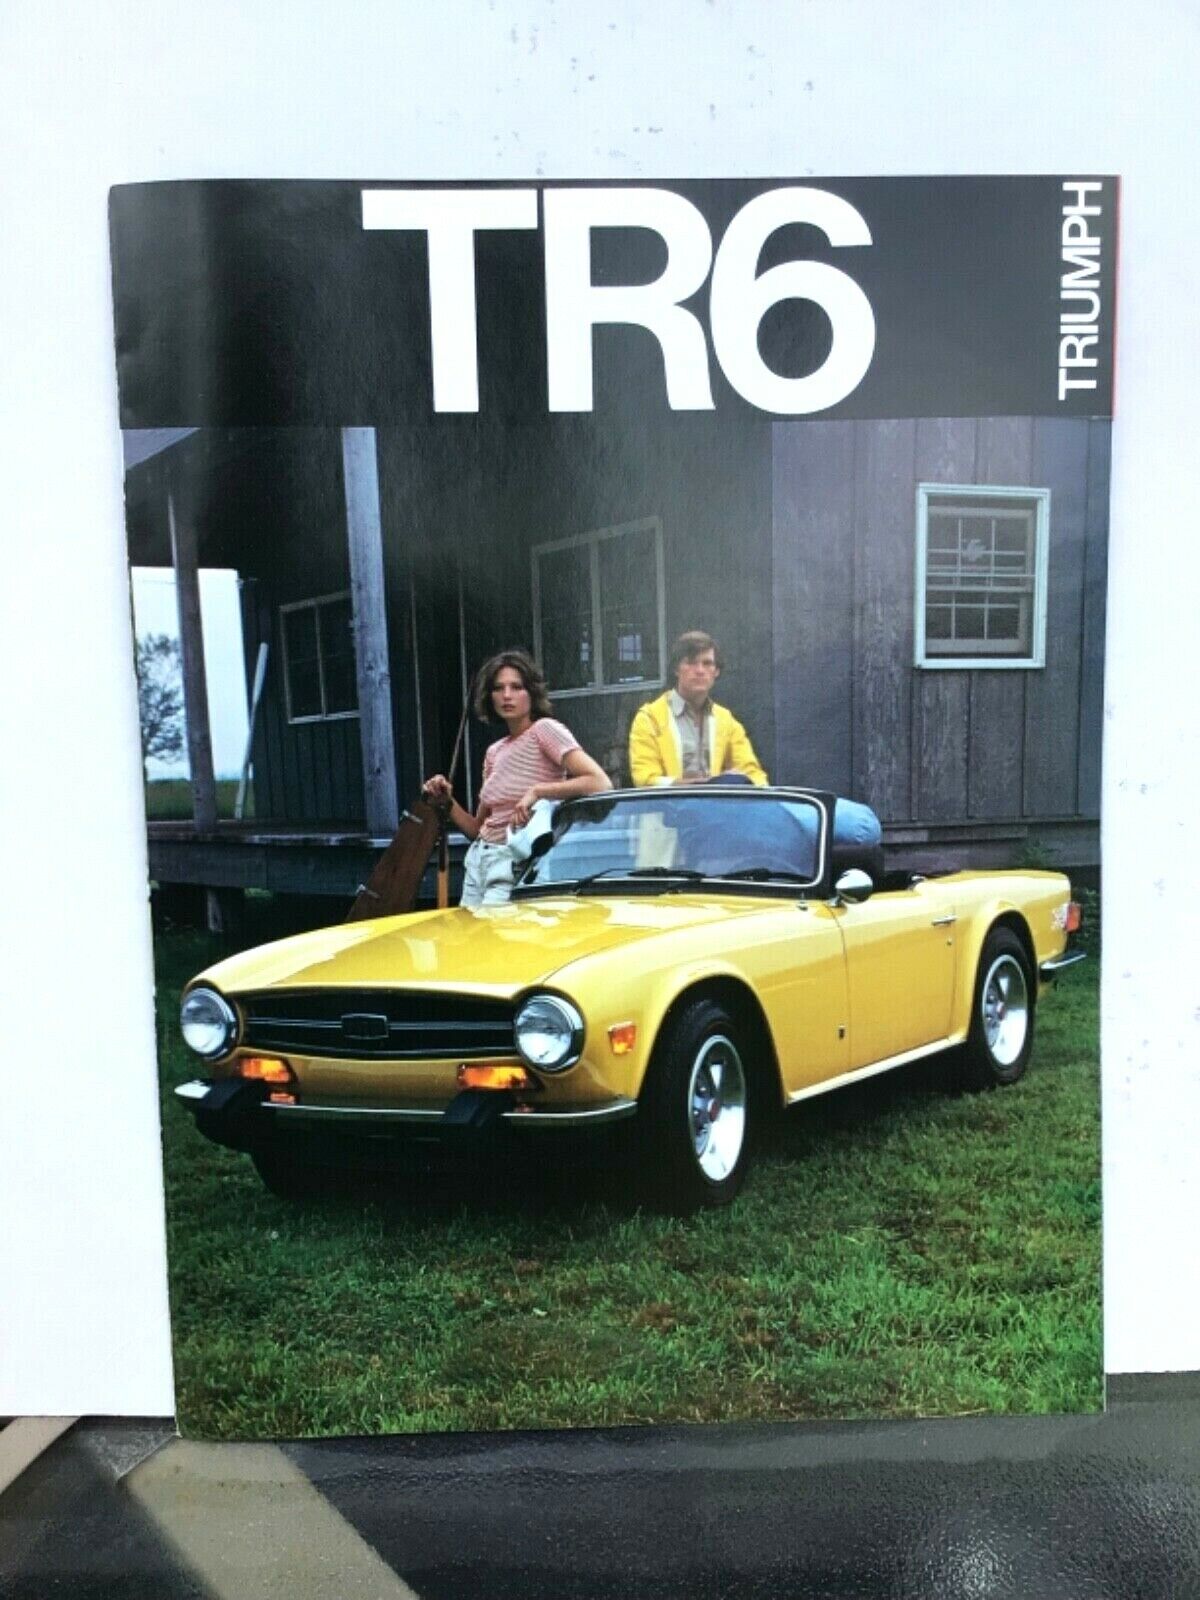 Triumph 1974 TR6 sales brochure. USA import car dealer